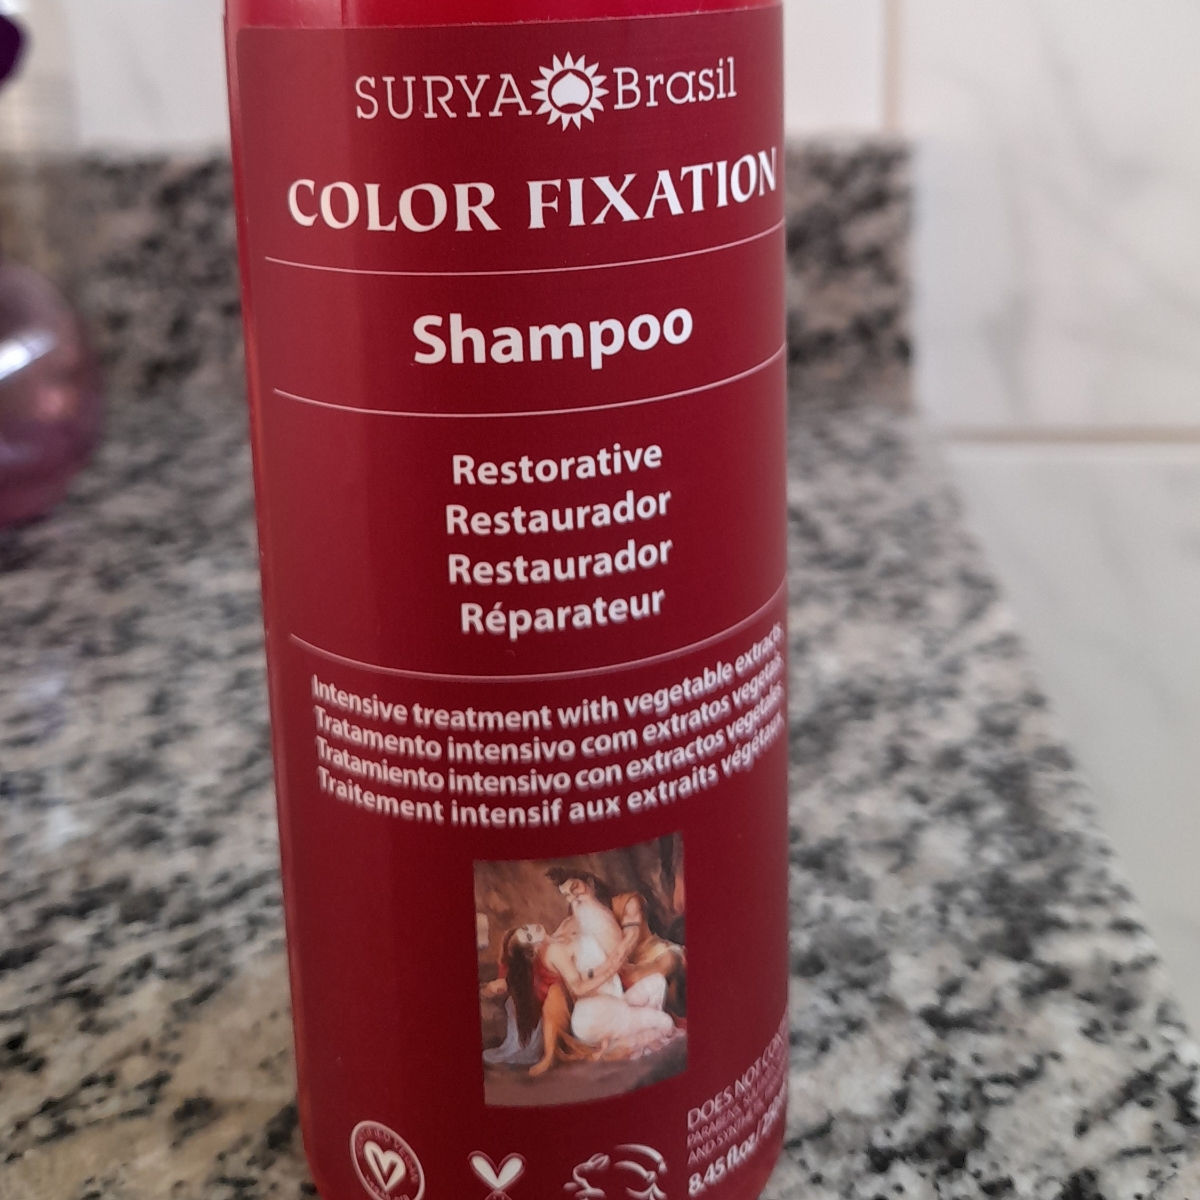 Surya Brasil surya brasil color fixation shampoo Reviews | abillion